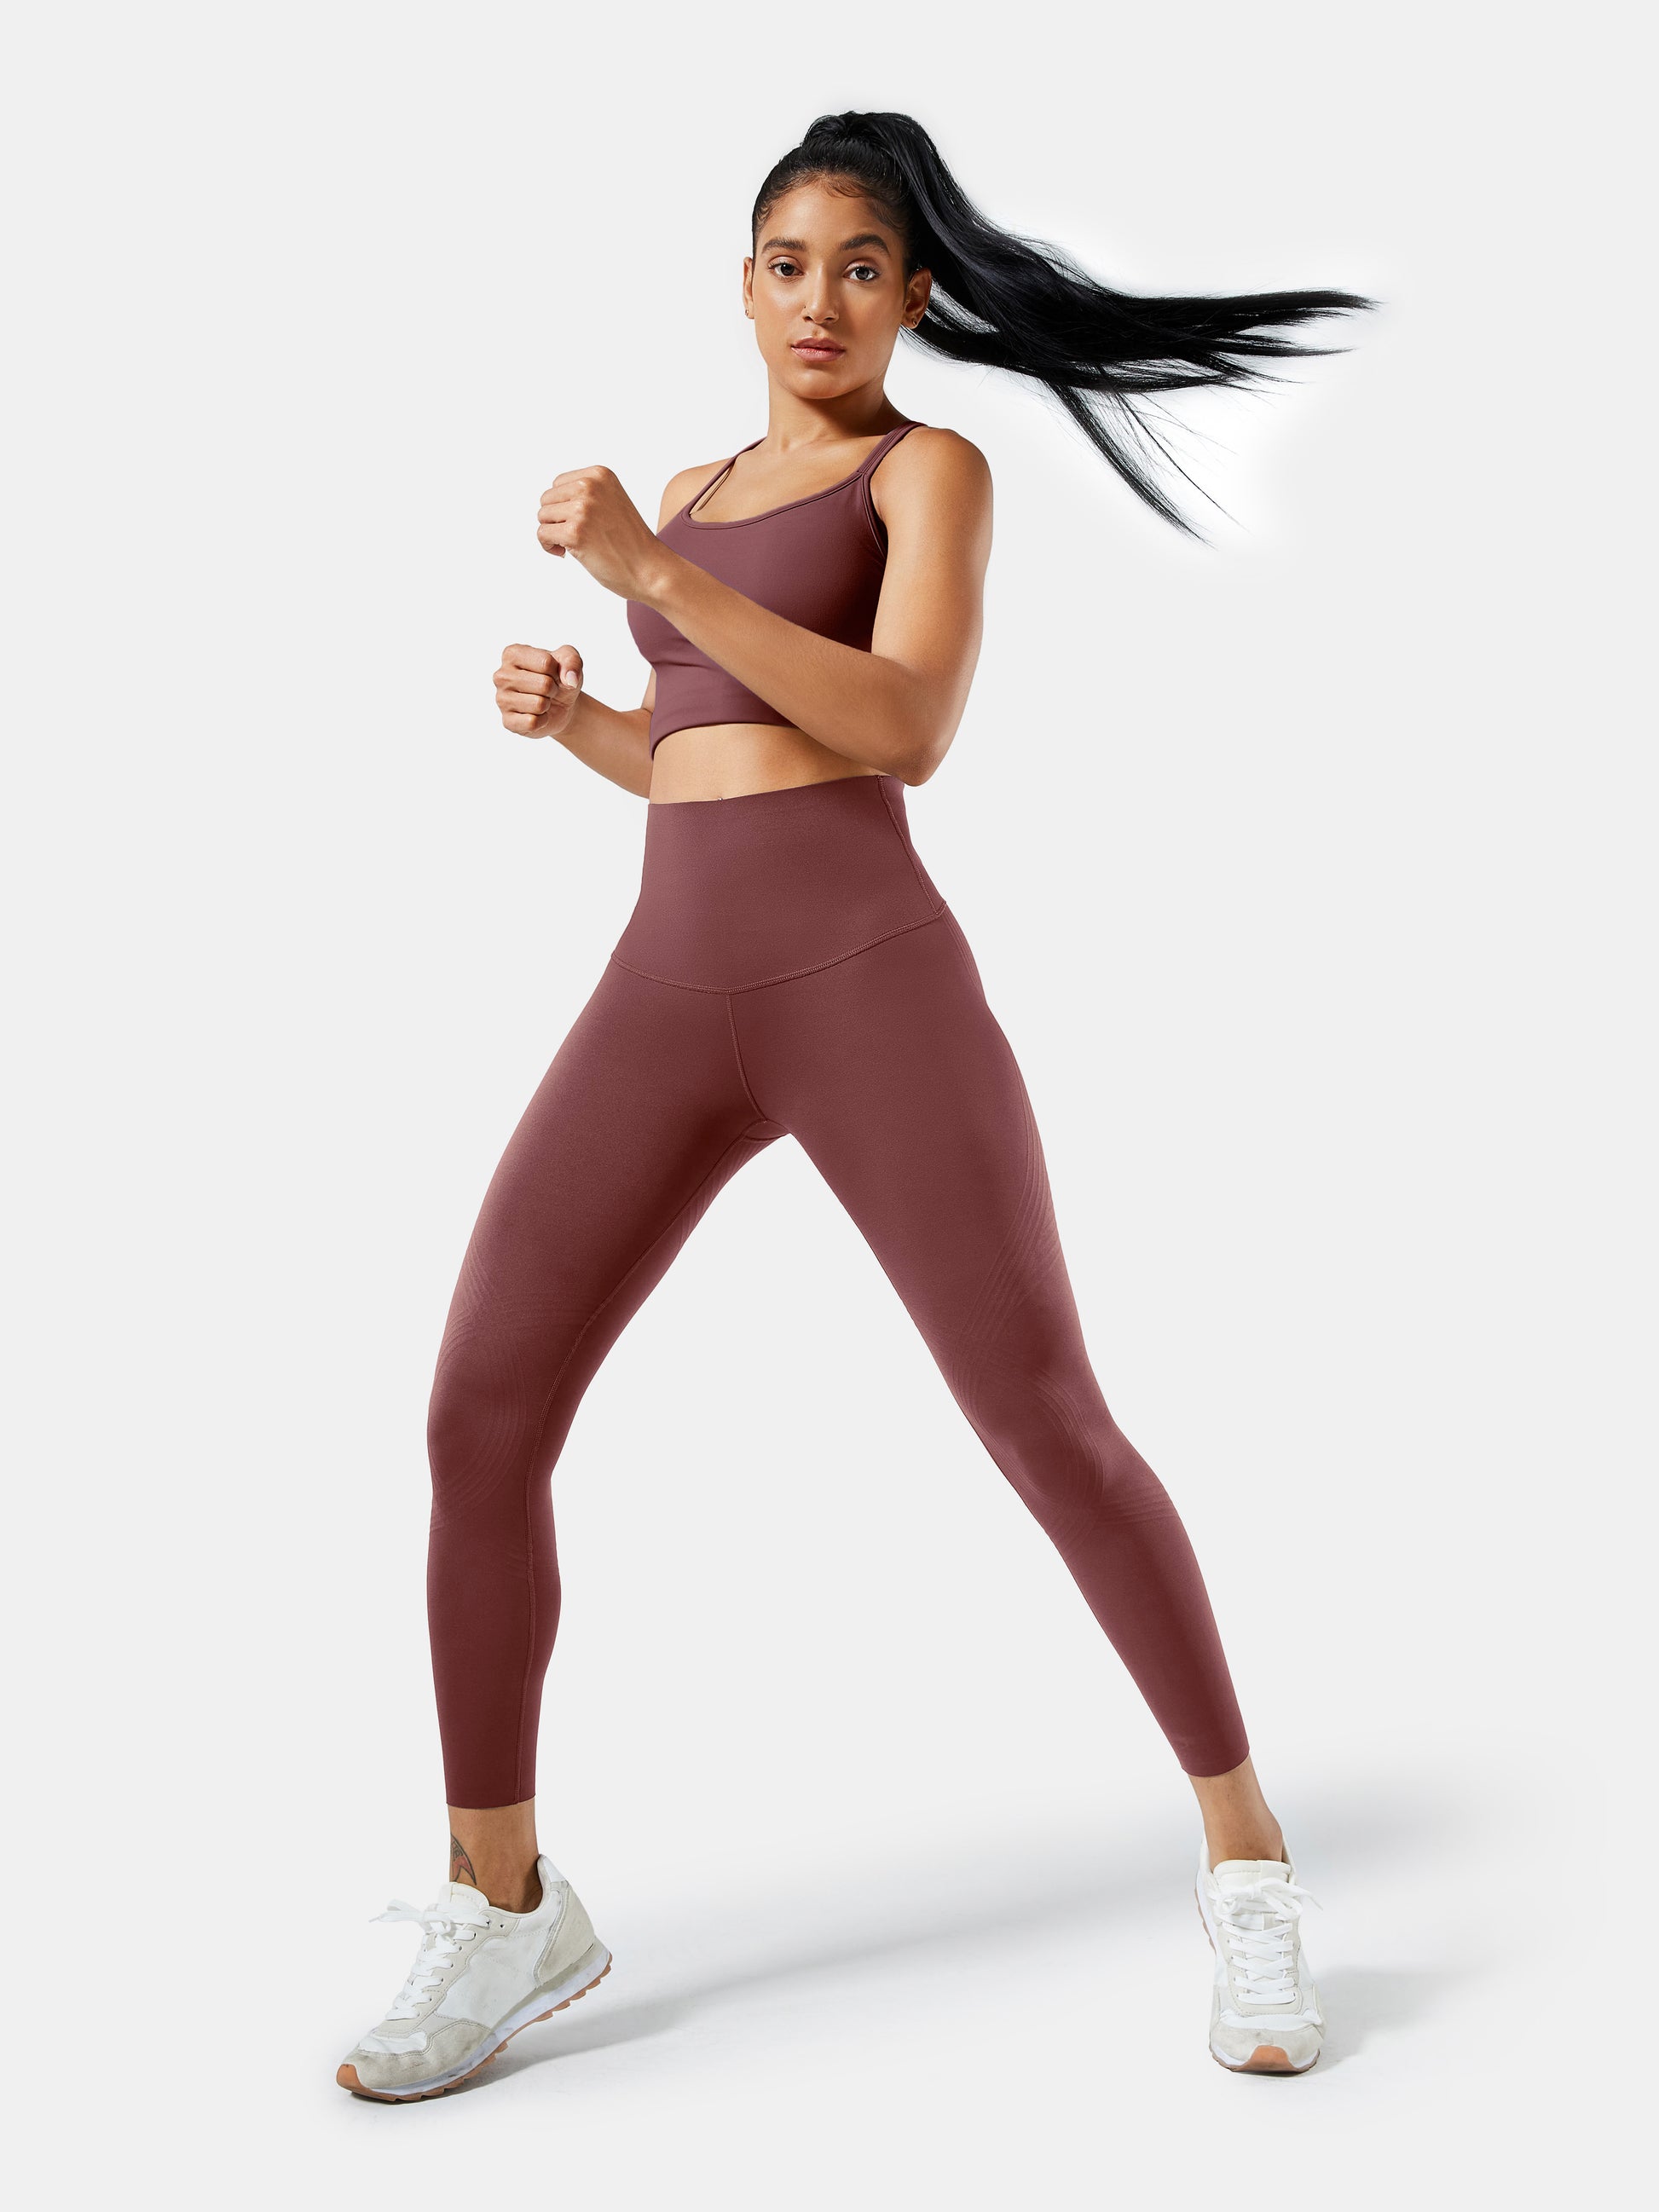 Fanka on Instagram: Lift up with #Fanka,🏃🏻‍♀️ you should be in good  shape and healthy.⁠ ⁠ 🤳: @savgraceleee⁠ ⁠ Discover more body sculpt  leggings via link in bio. ⁠ #fanka #fankafam #movewithfanka #liftncurve